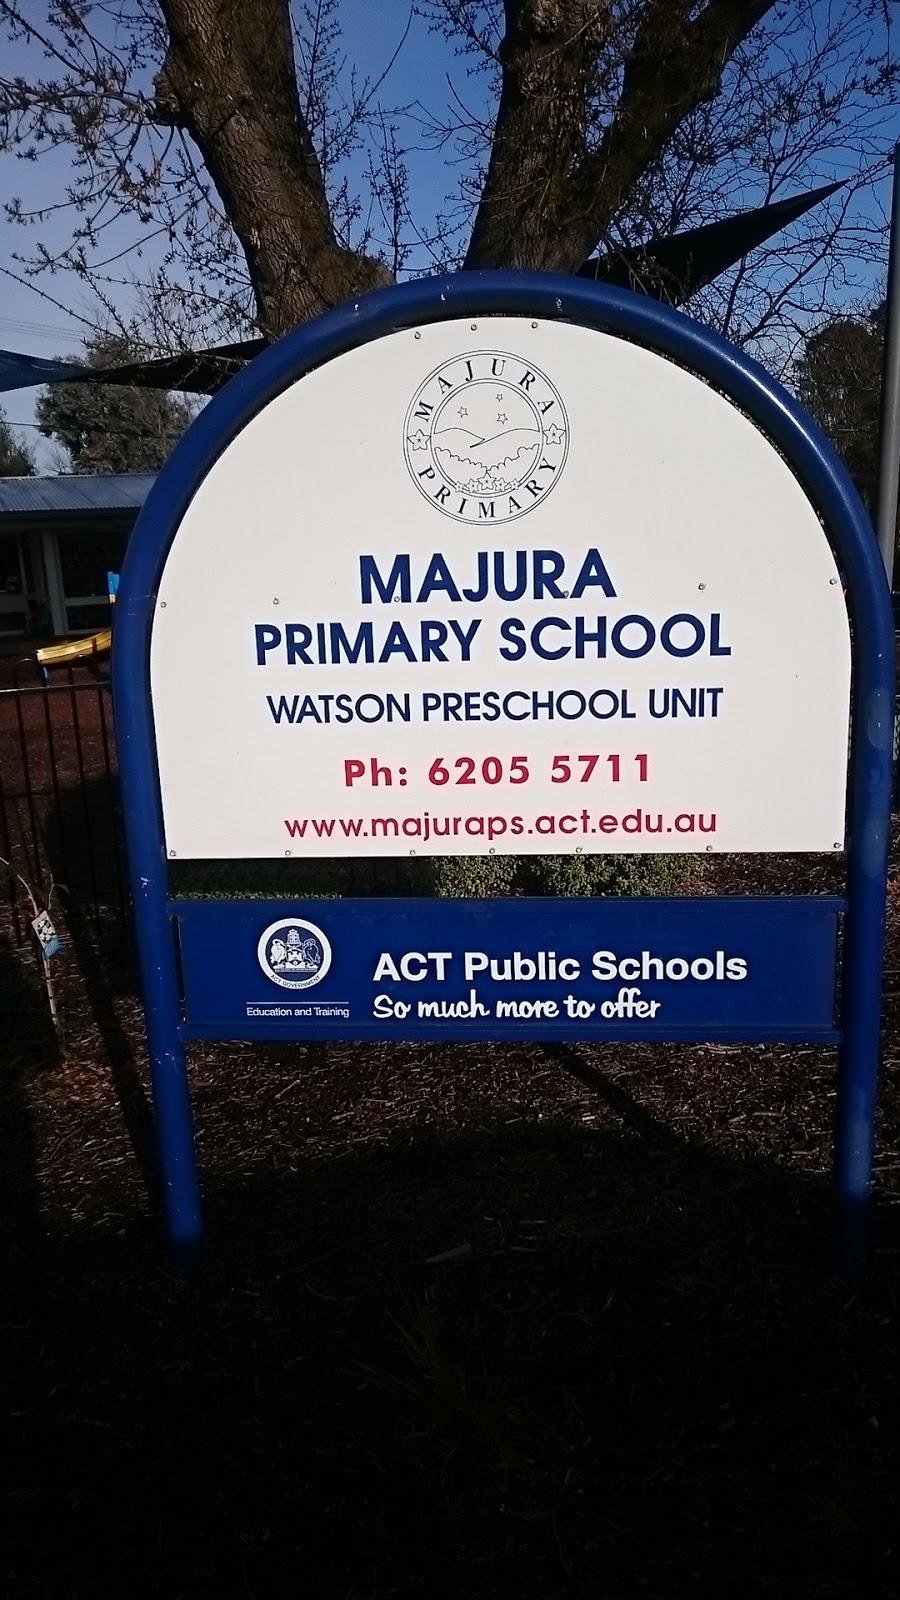 Majura Primary School - Watson Preschool Unit | school | 60 Knox St, Watson ACT 2602, Australia | 0262056605 OR +61 2 6205 6605